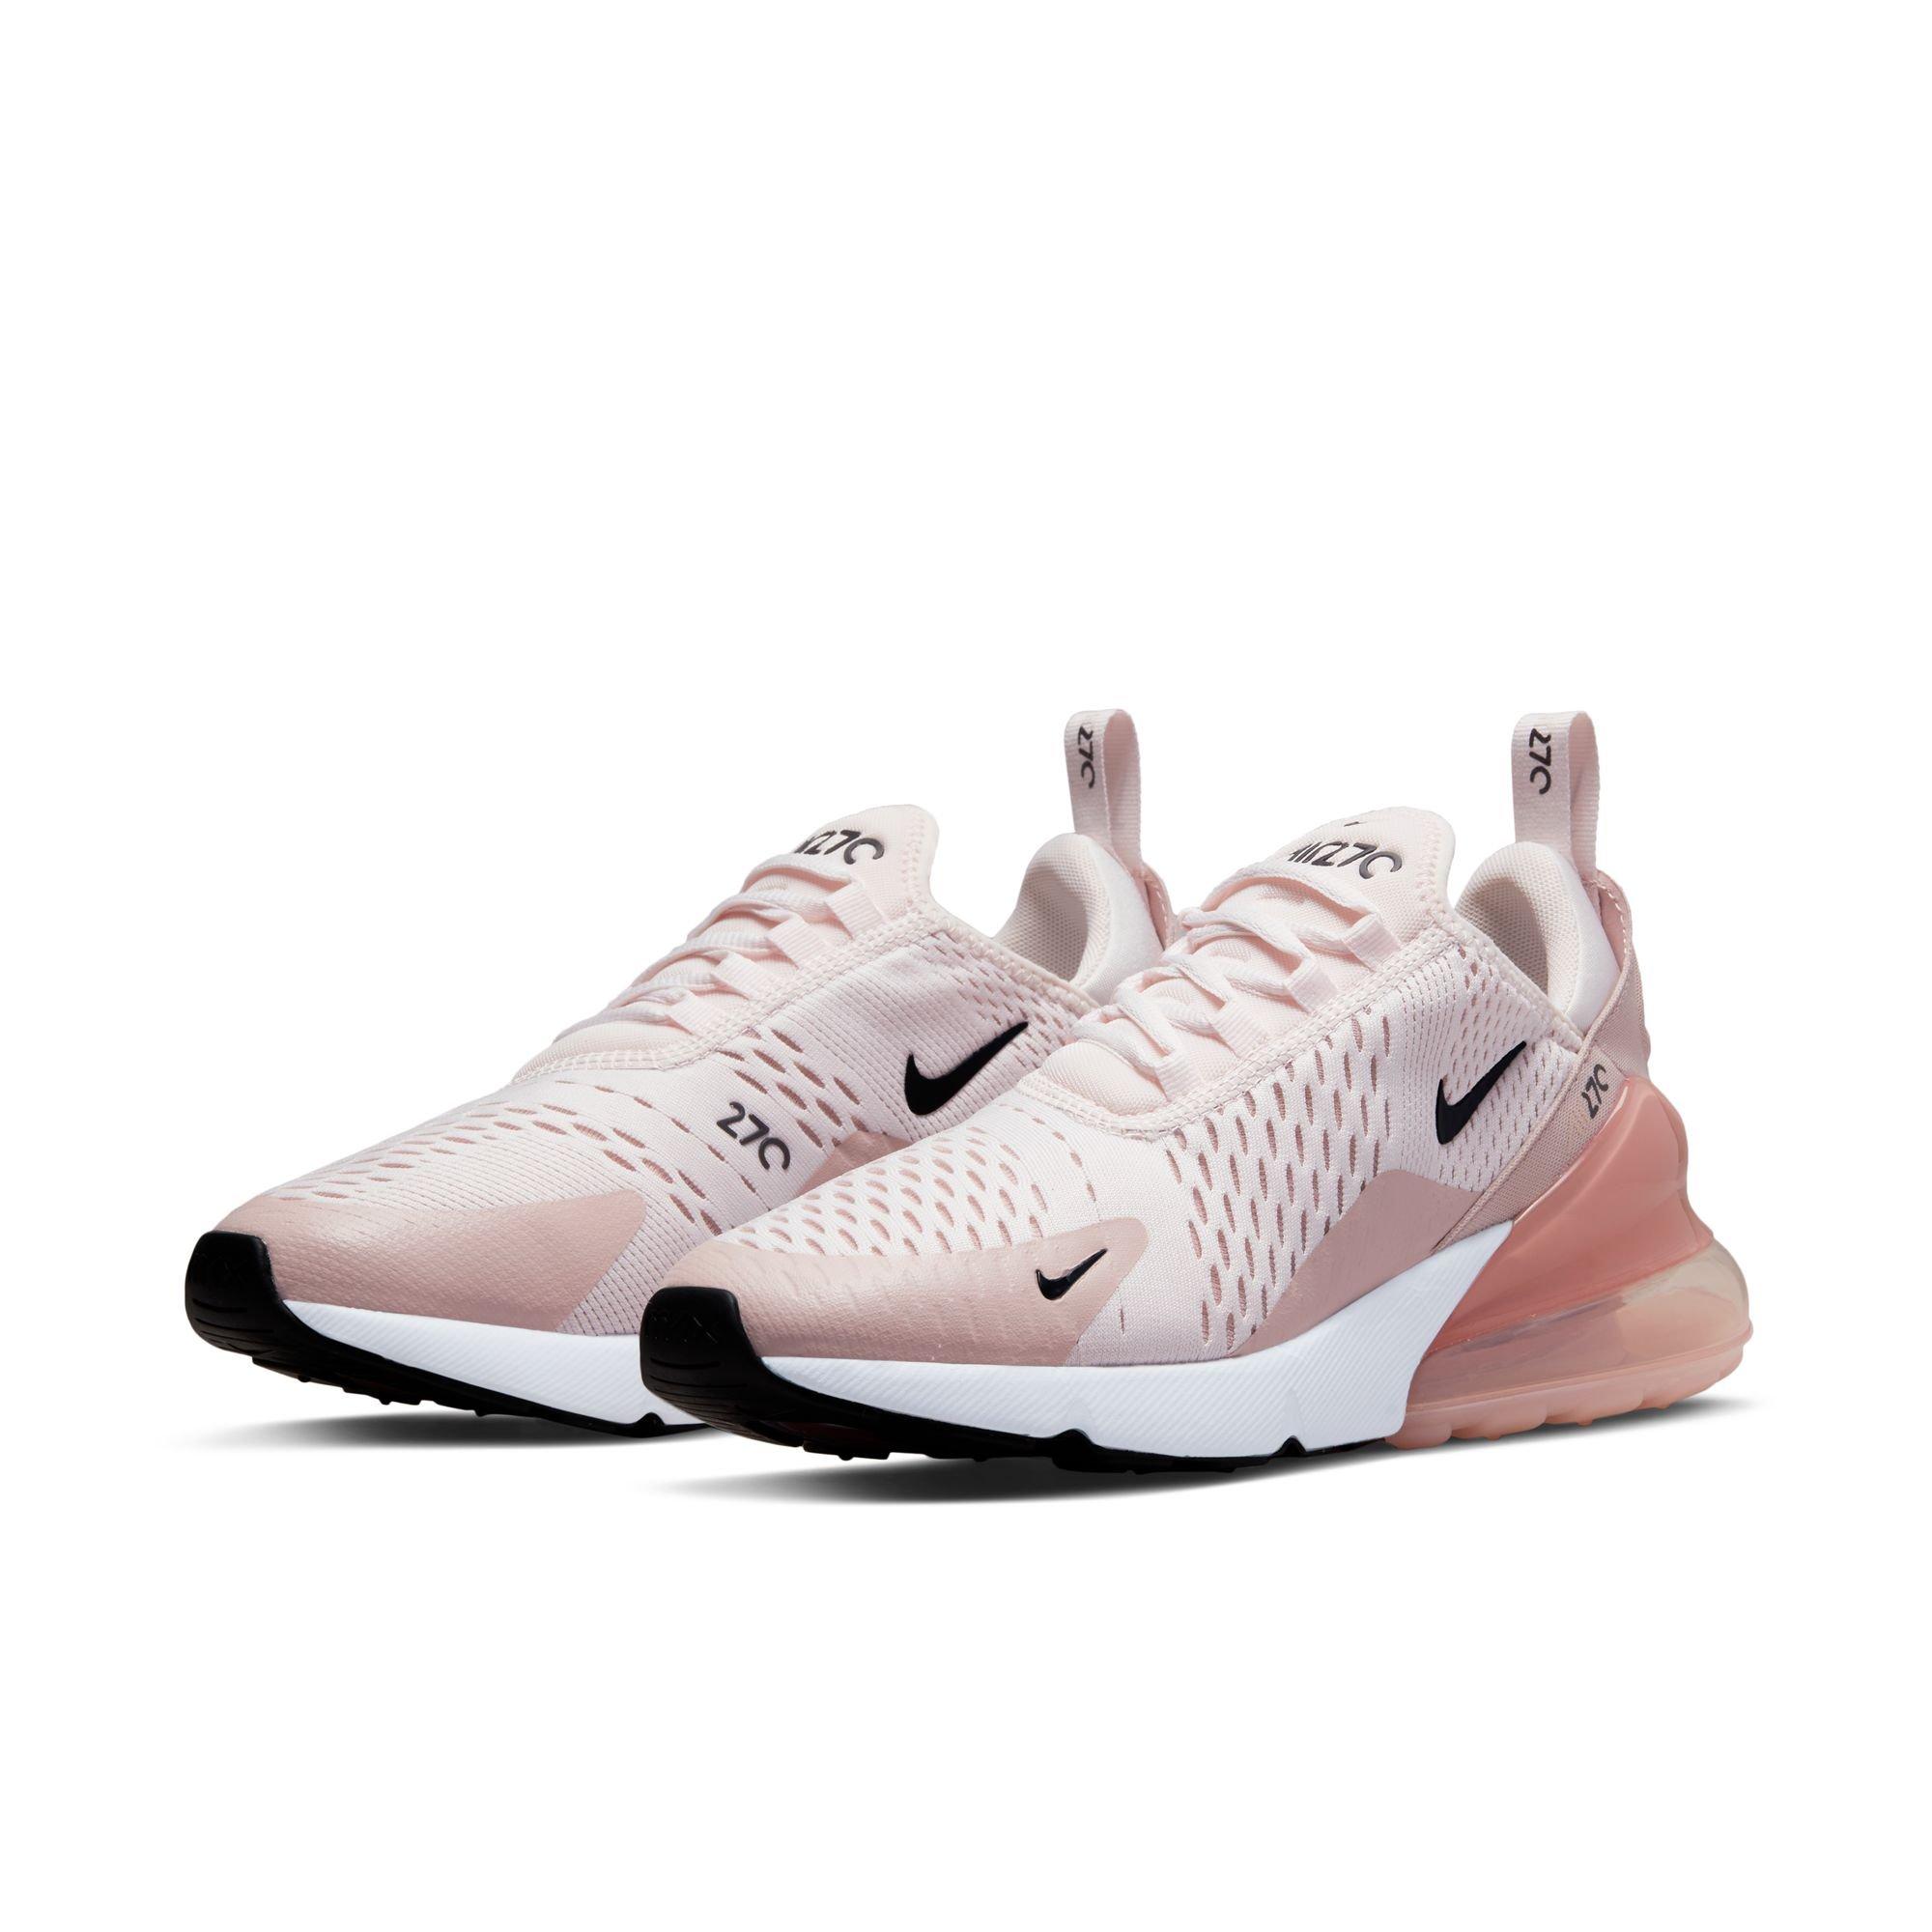 También carro Exclusivo Nike Air Max 270 "Light Soft Pink/Black/Pink Oxford" Women's Shoe